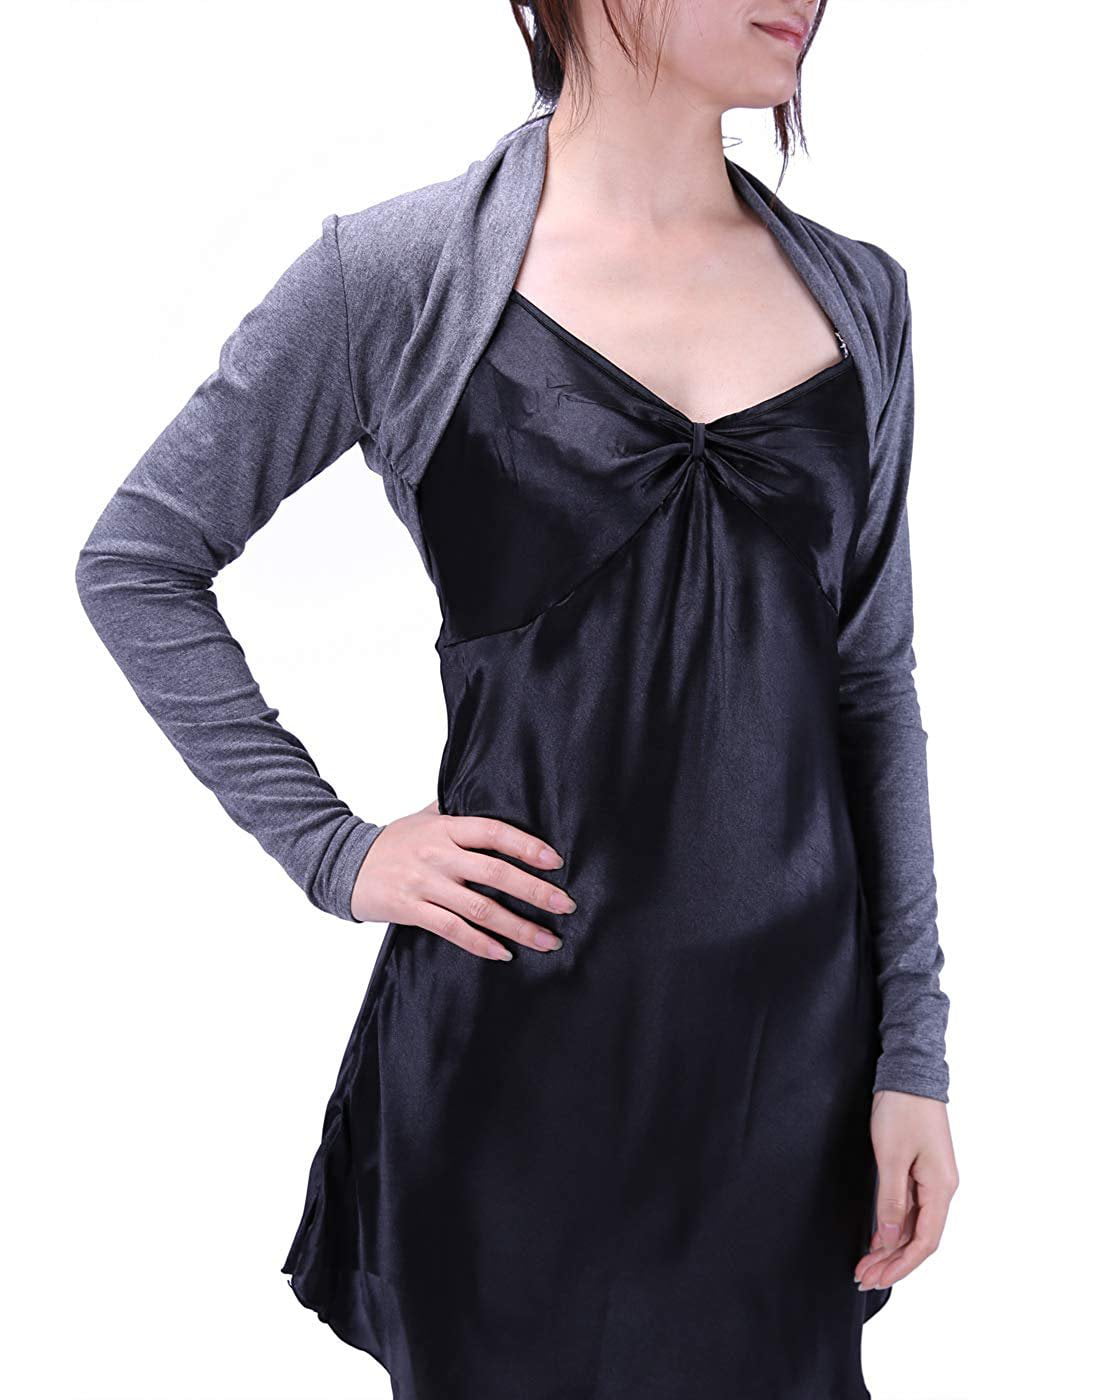 HDE Women's Bolero Long Sleeve Cardigan Shrug (Dark Charcoal Grey, X-Large)  - Walmart.com